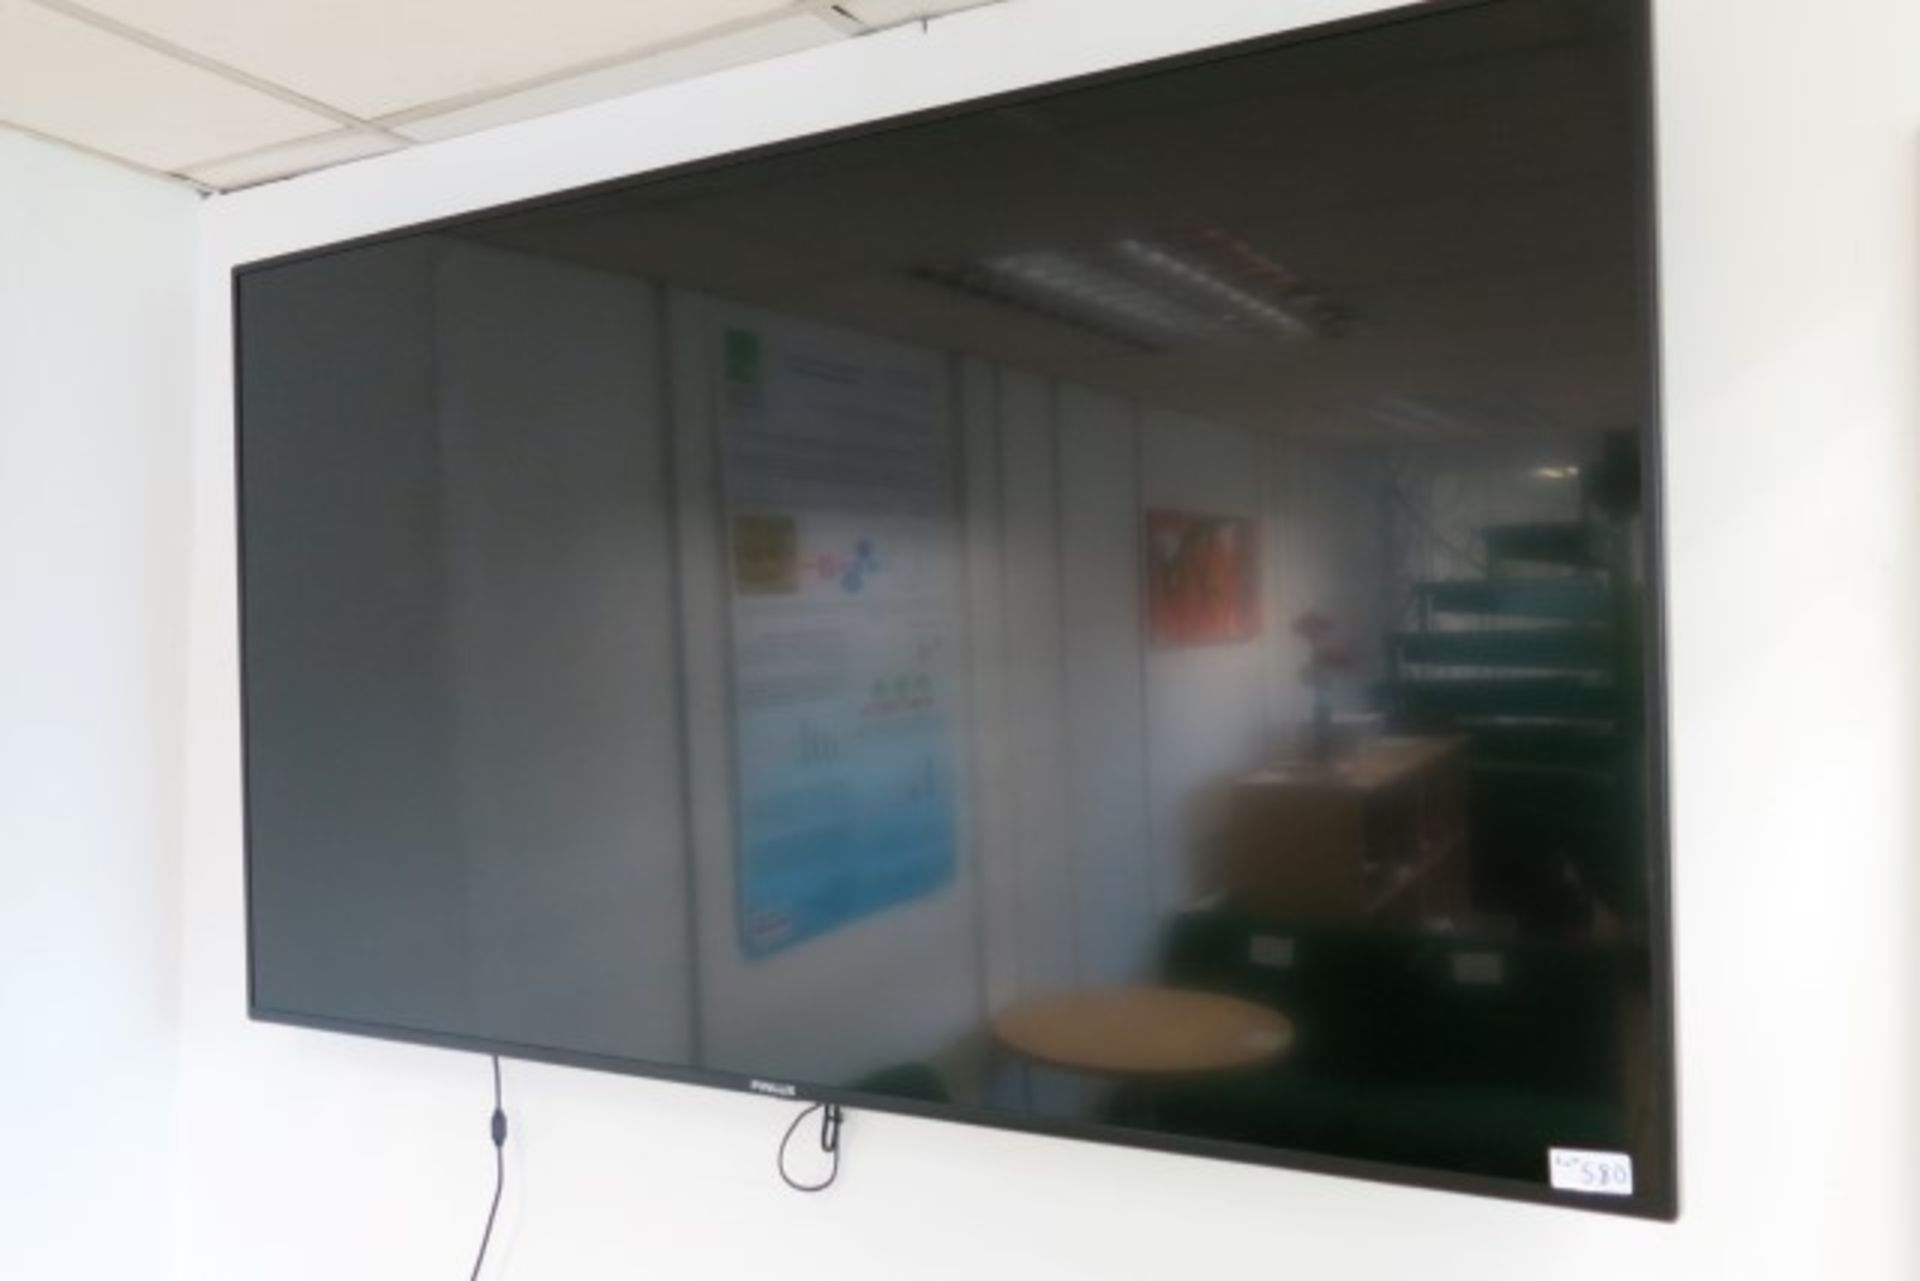 Finlux 64" wall mounted flatscreen television